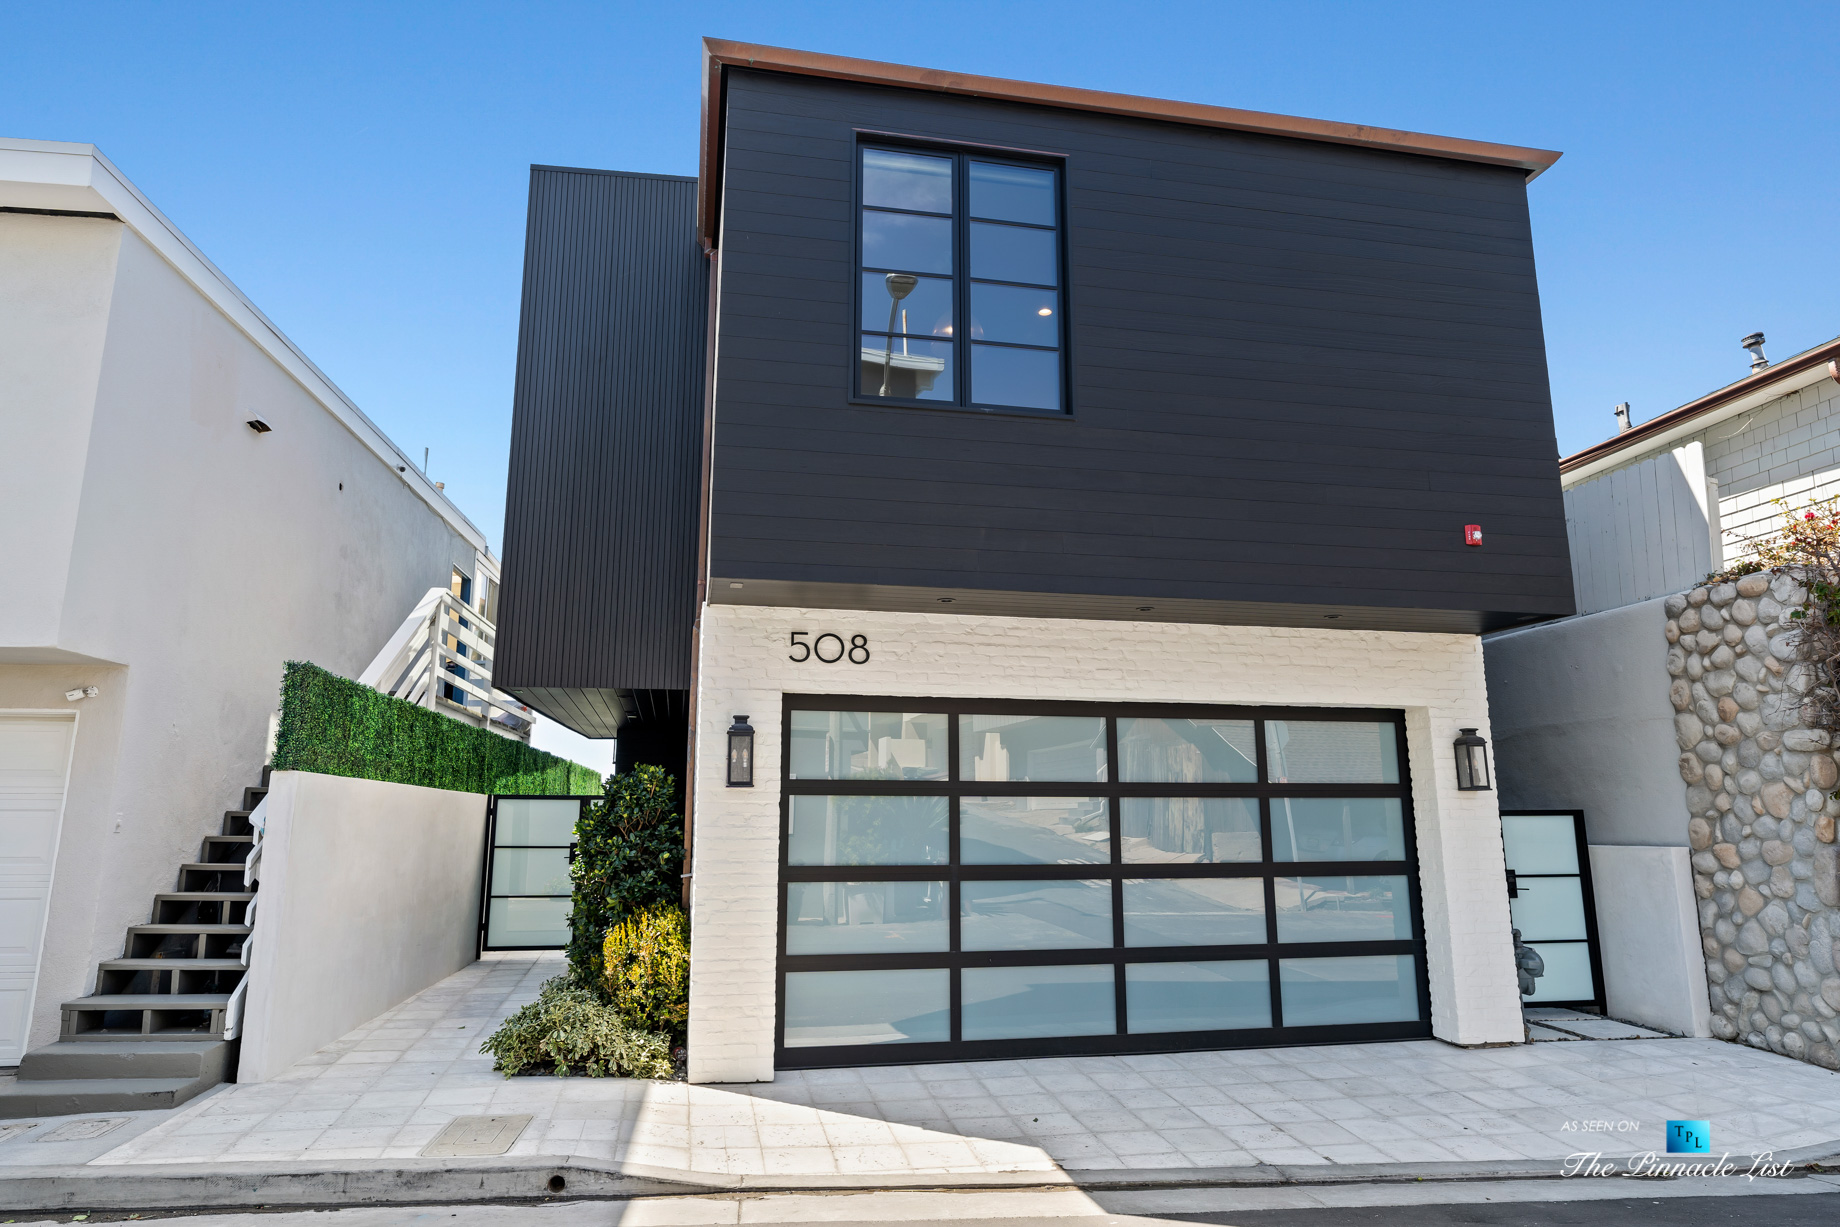 508 The Strand, Manhattan Beach, CA, USA - Exterior Garage Door - Luxury Real Estate - Oceanfront Home